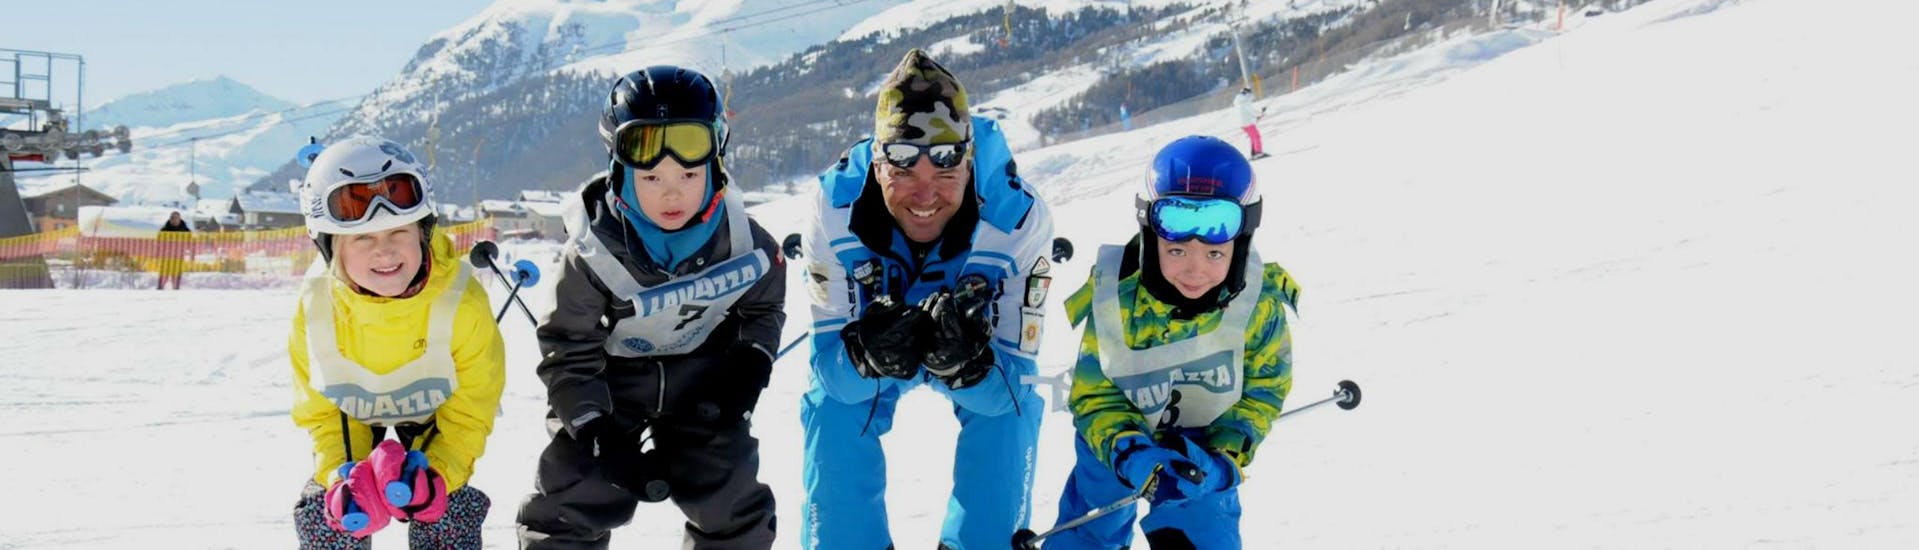 Three children are enjoying their Kids Ski Lessons Half Day (3-4 y.) - Beginner alongside their ski instructor from the ski school Scuola di Sci e Snowboard Livigno Italy.